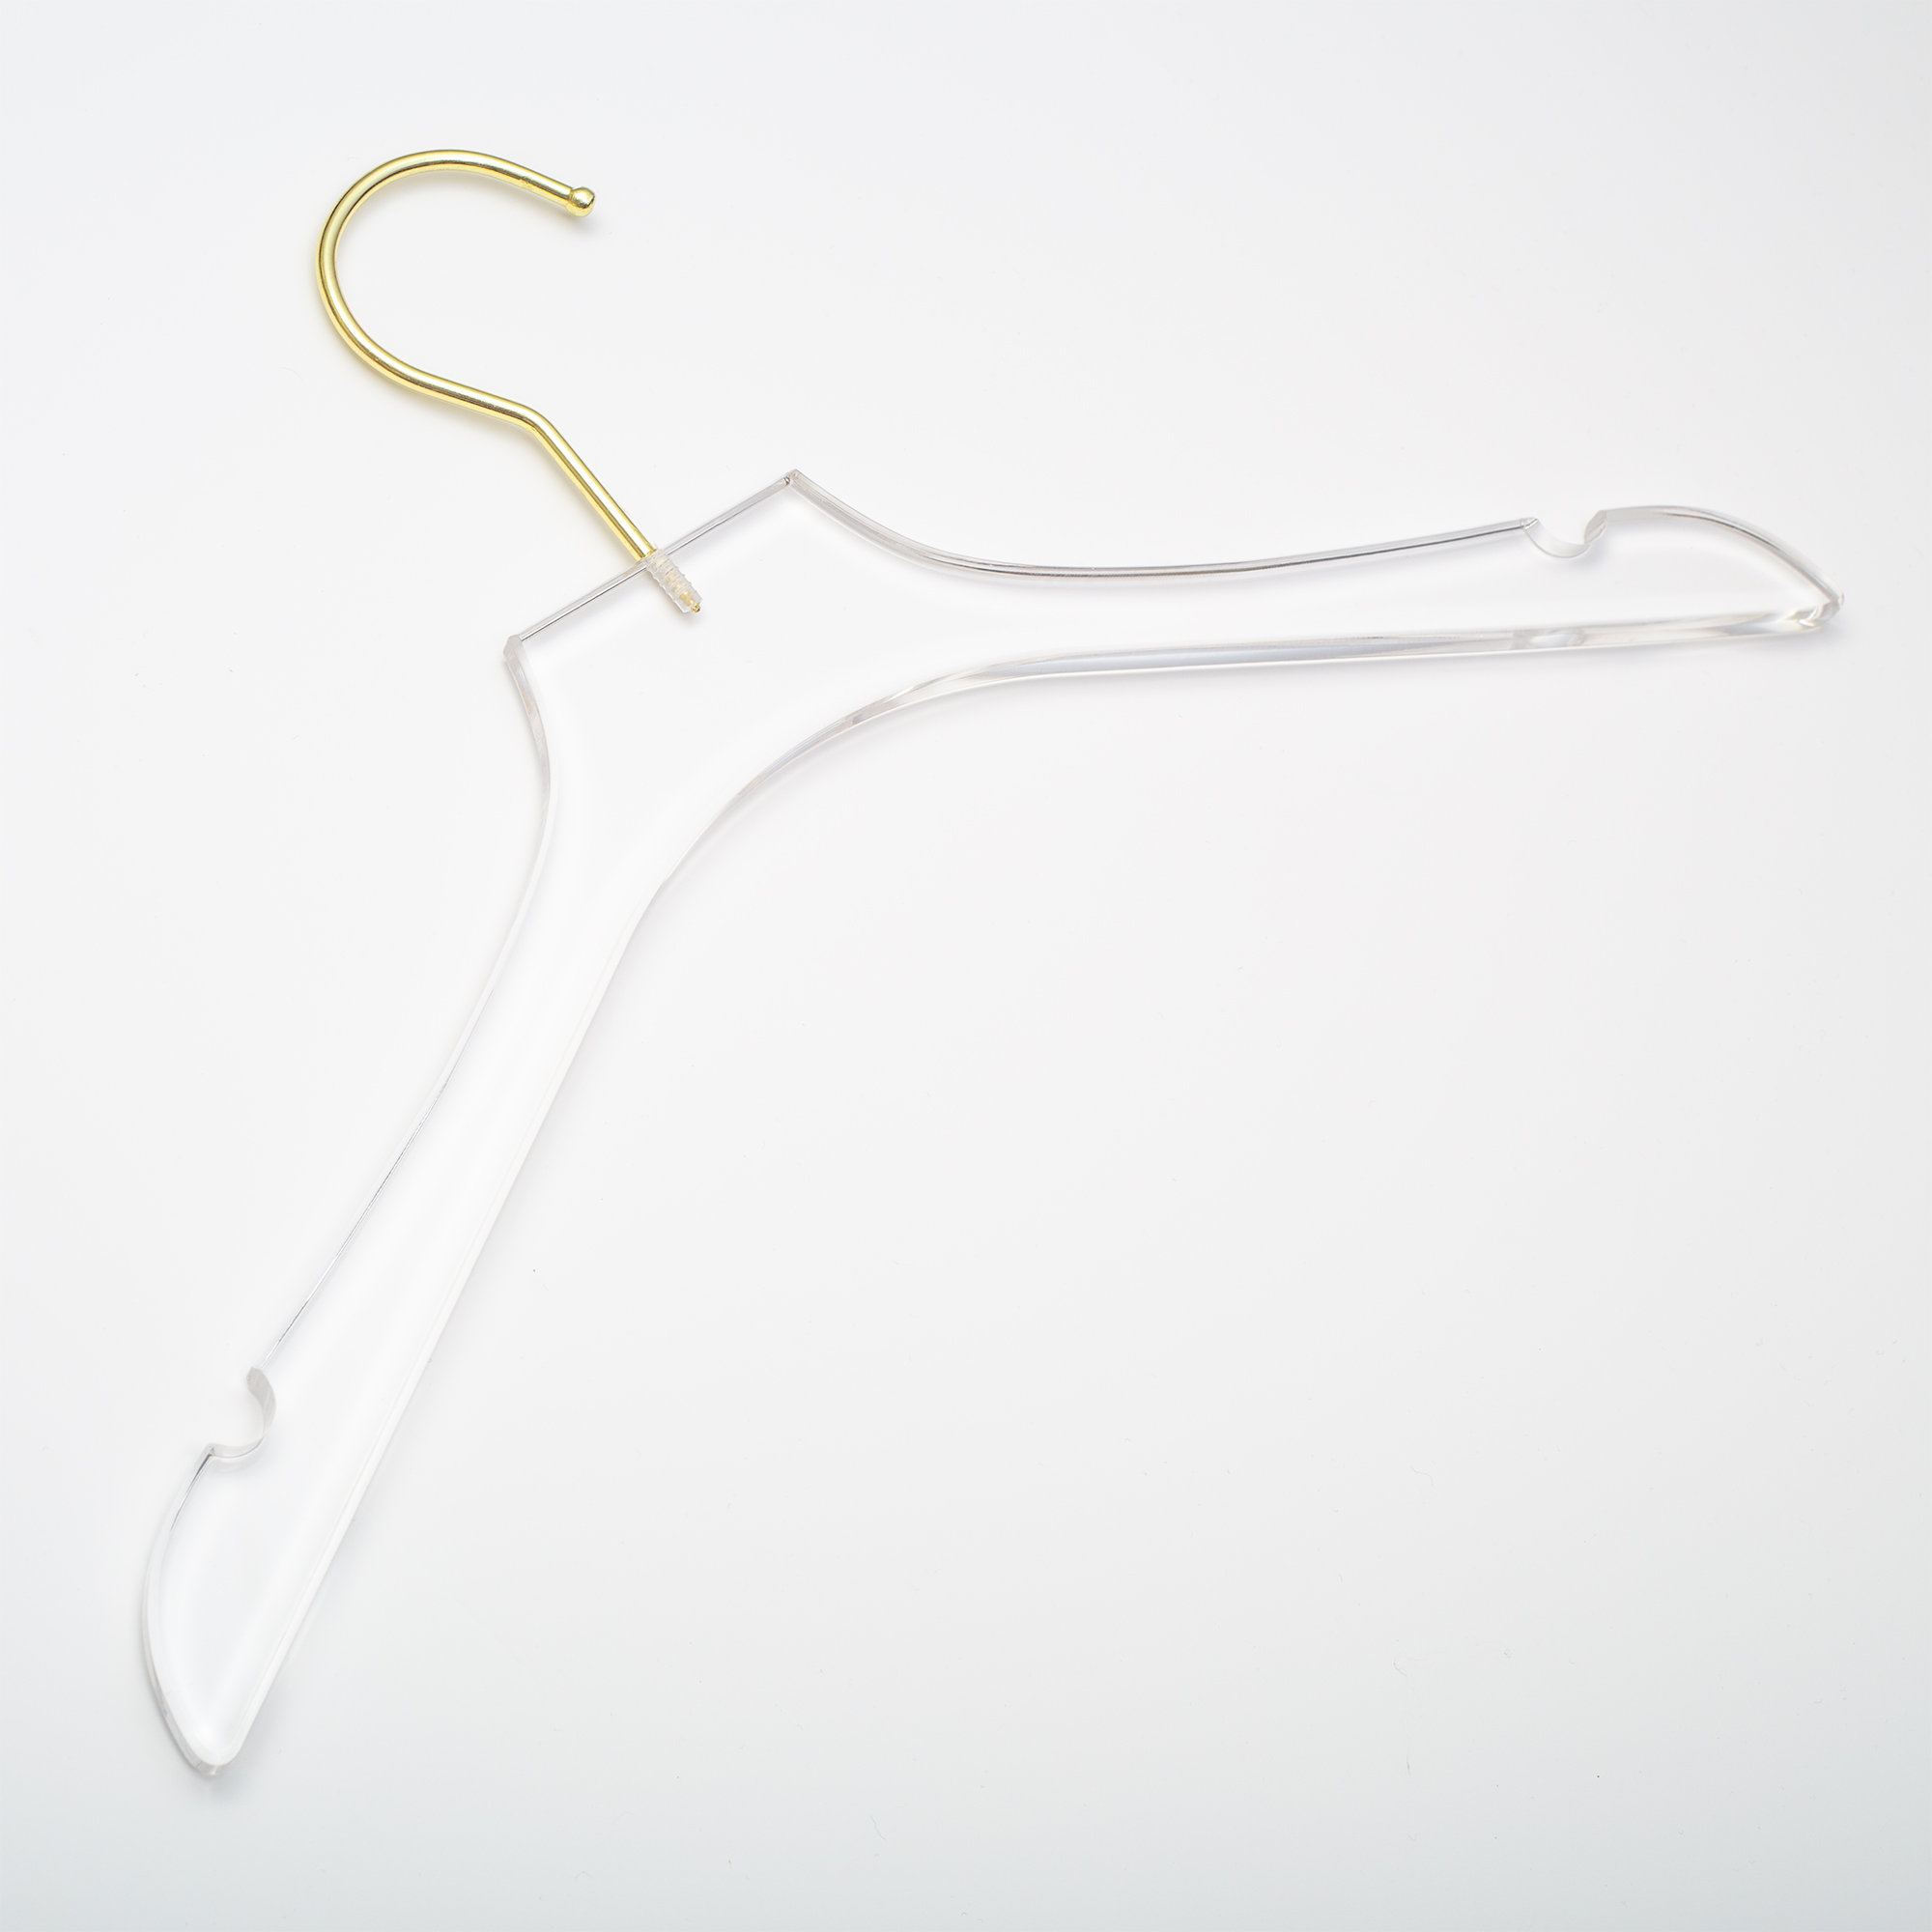 Adult Plastic Hangers: Black Jumbo Heavy Weight 17 Inch Bridal Hanger